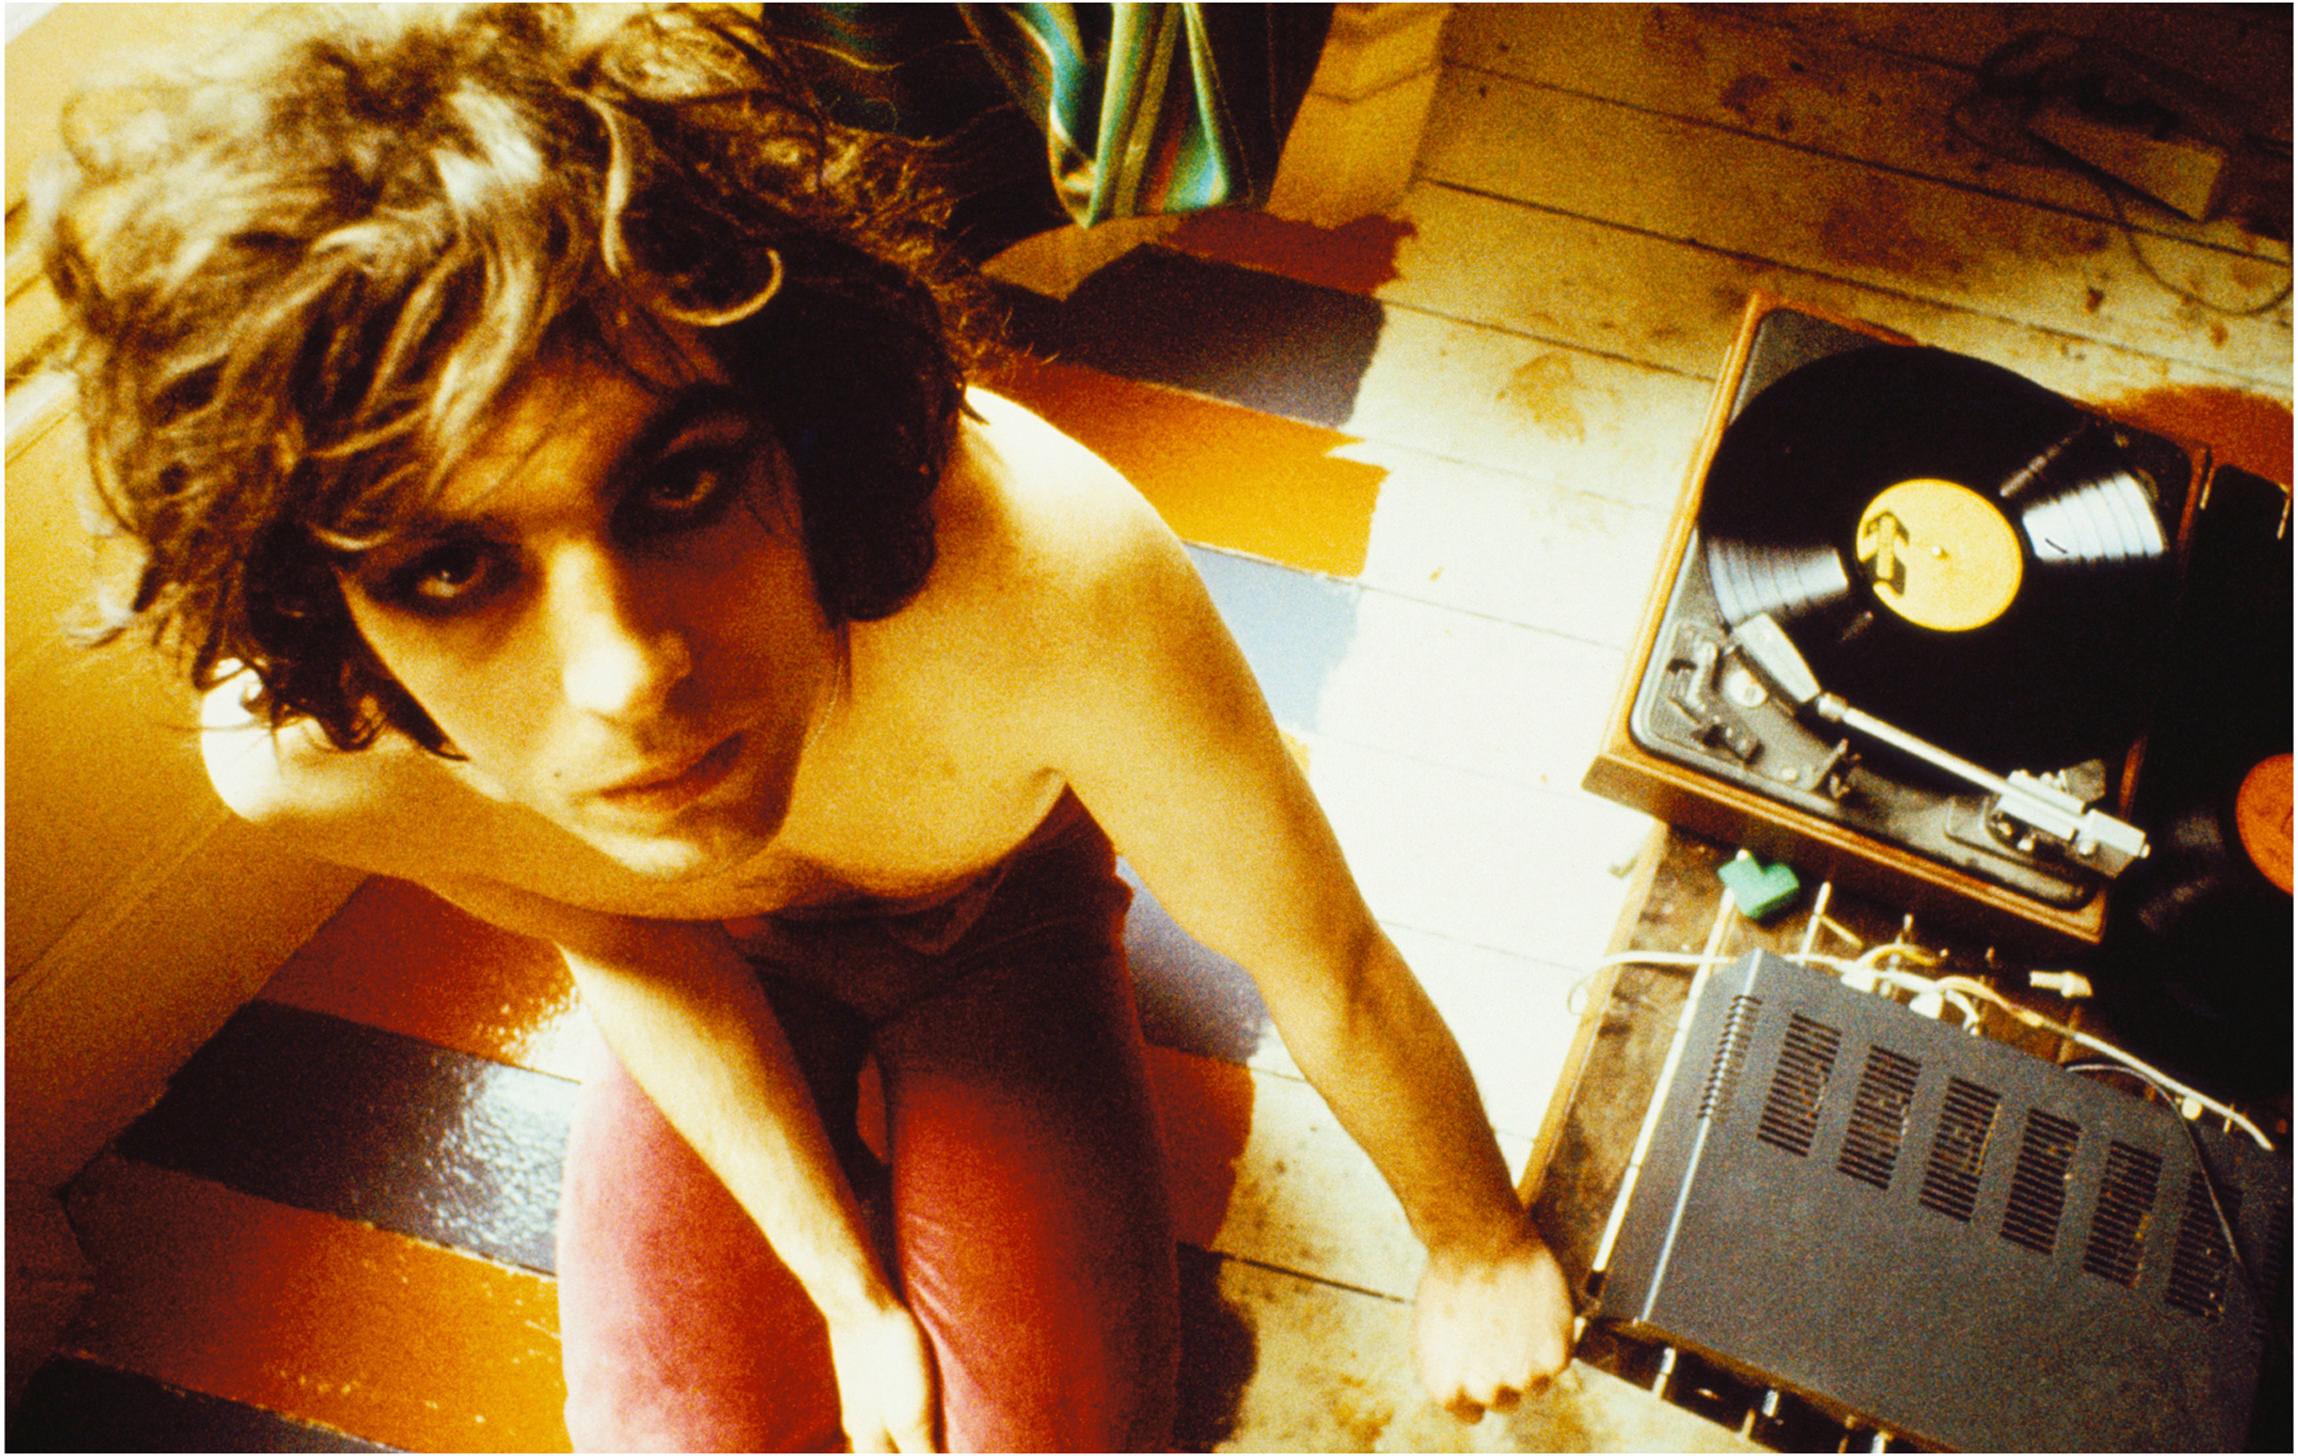 Mick Rock Portrait Photograph – Syd Barrett